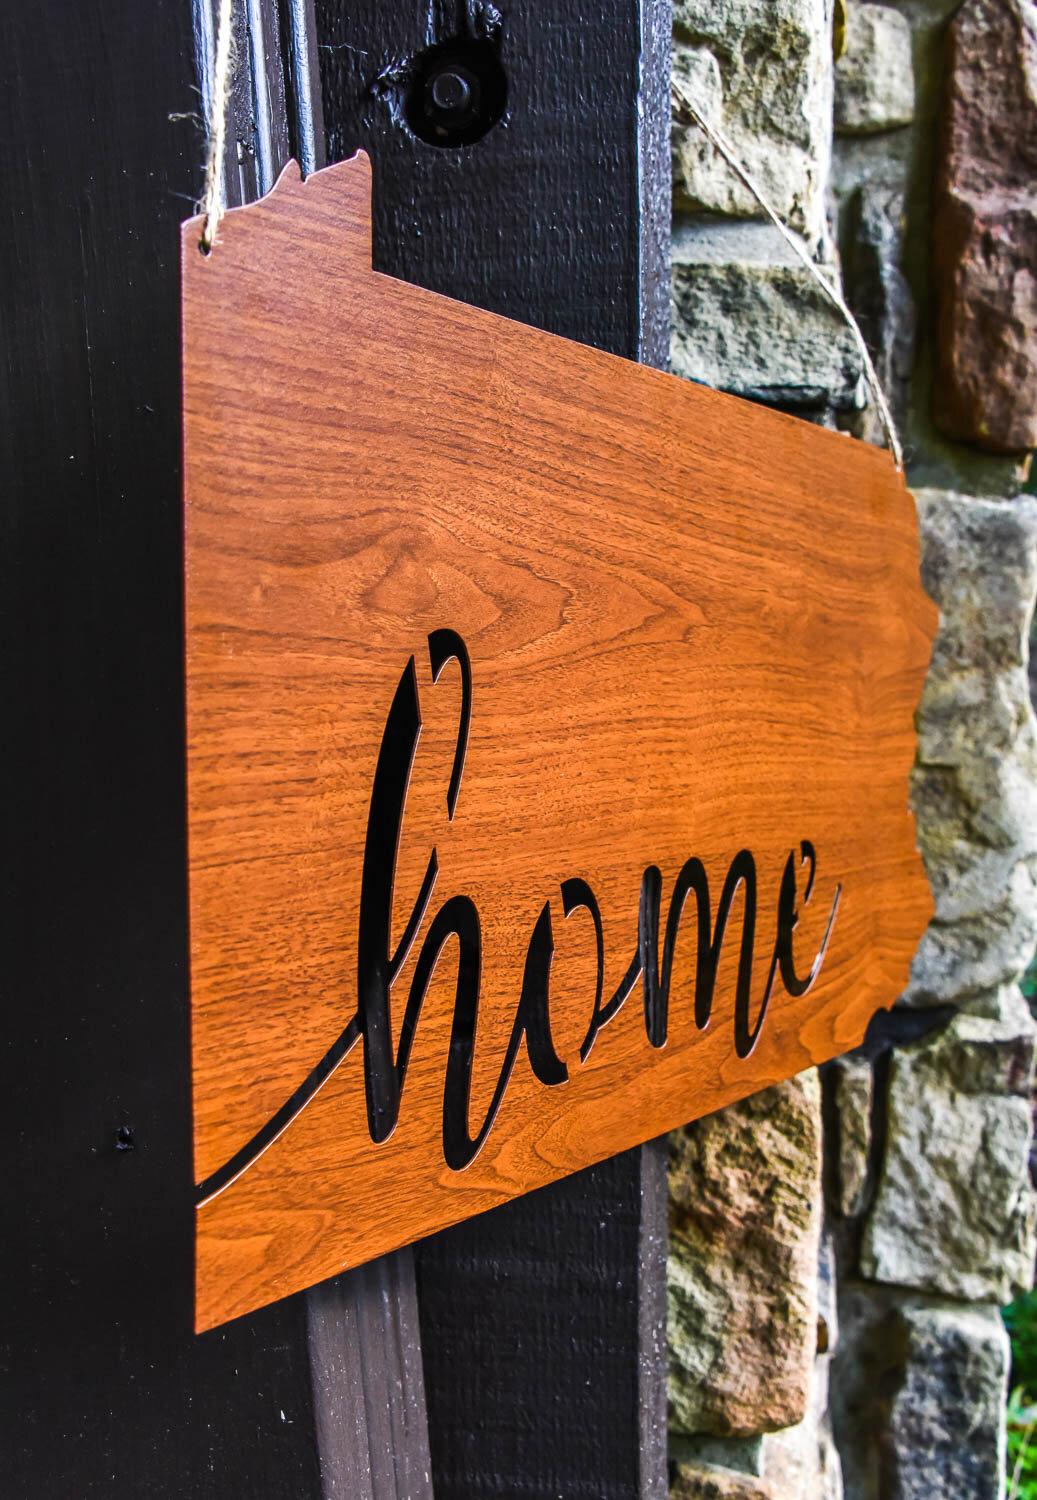 Wood grain PA 'home' sign 3.jpg